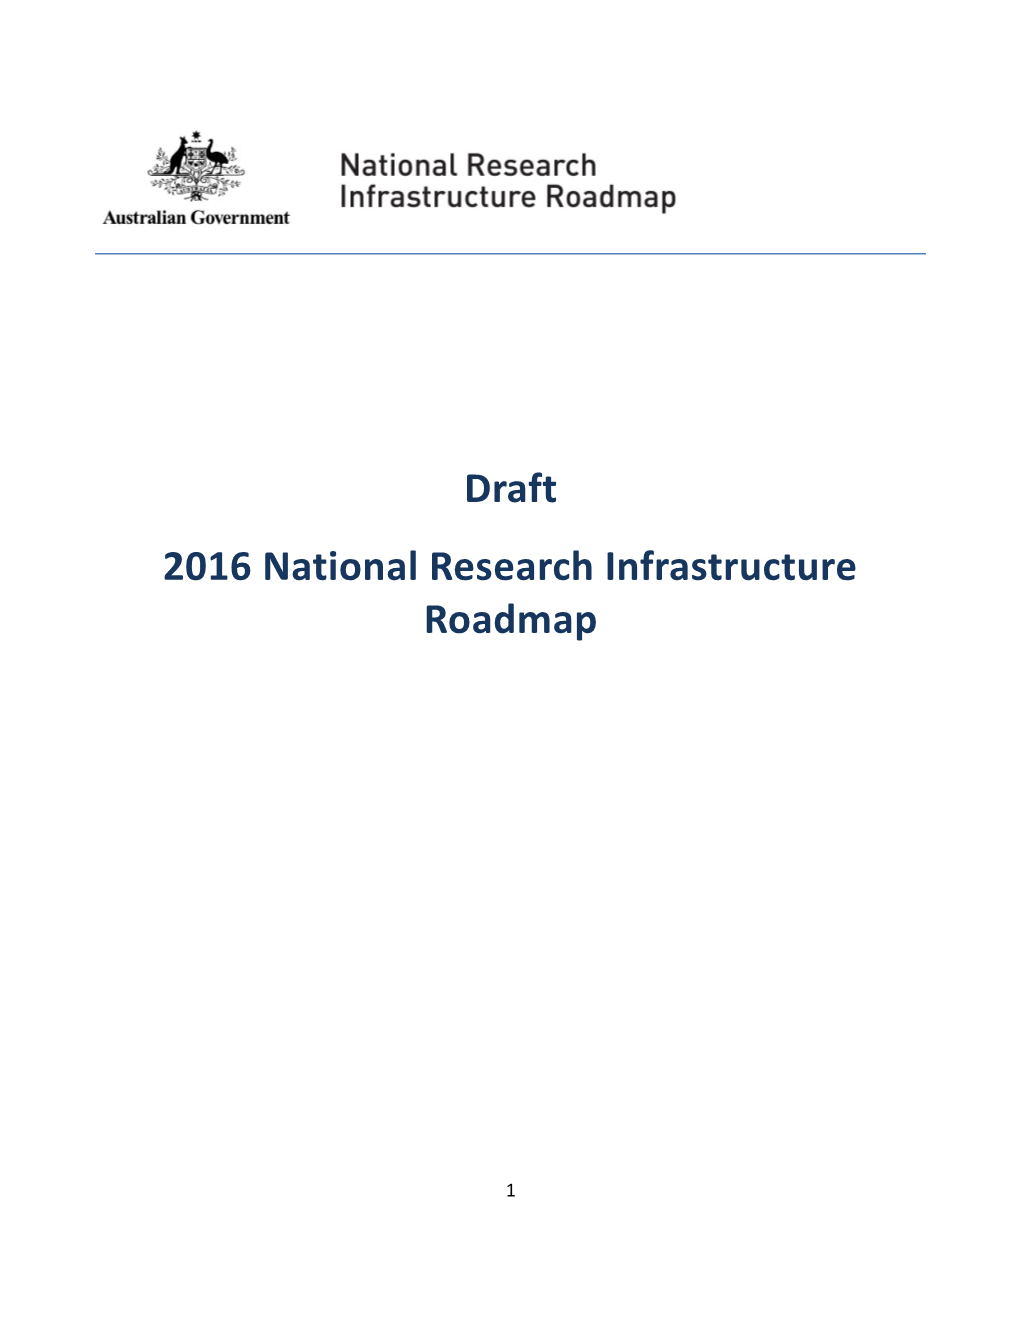 2016 National Research Infrastructureroadmap